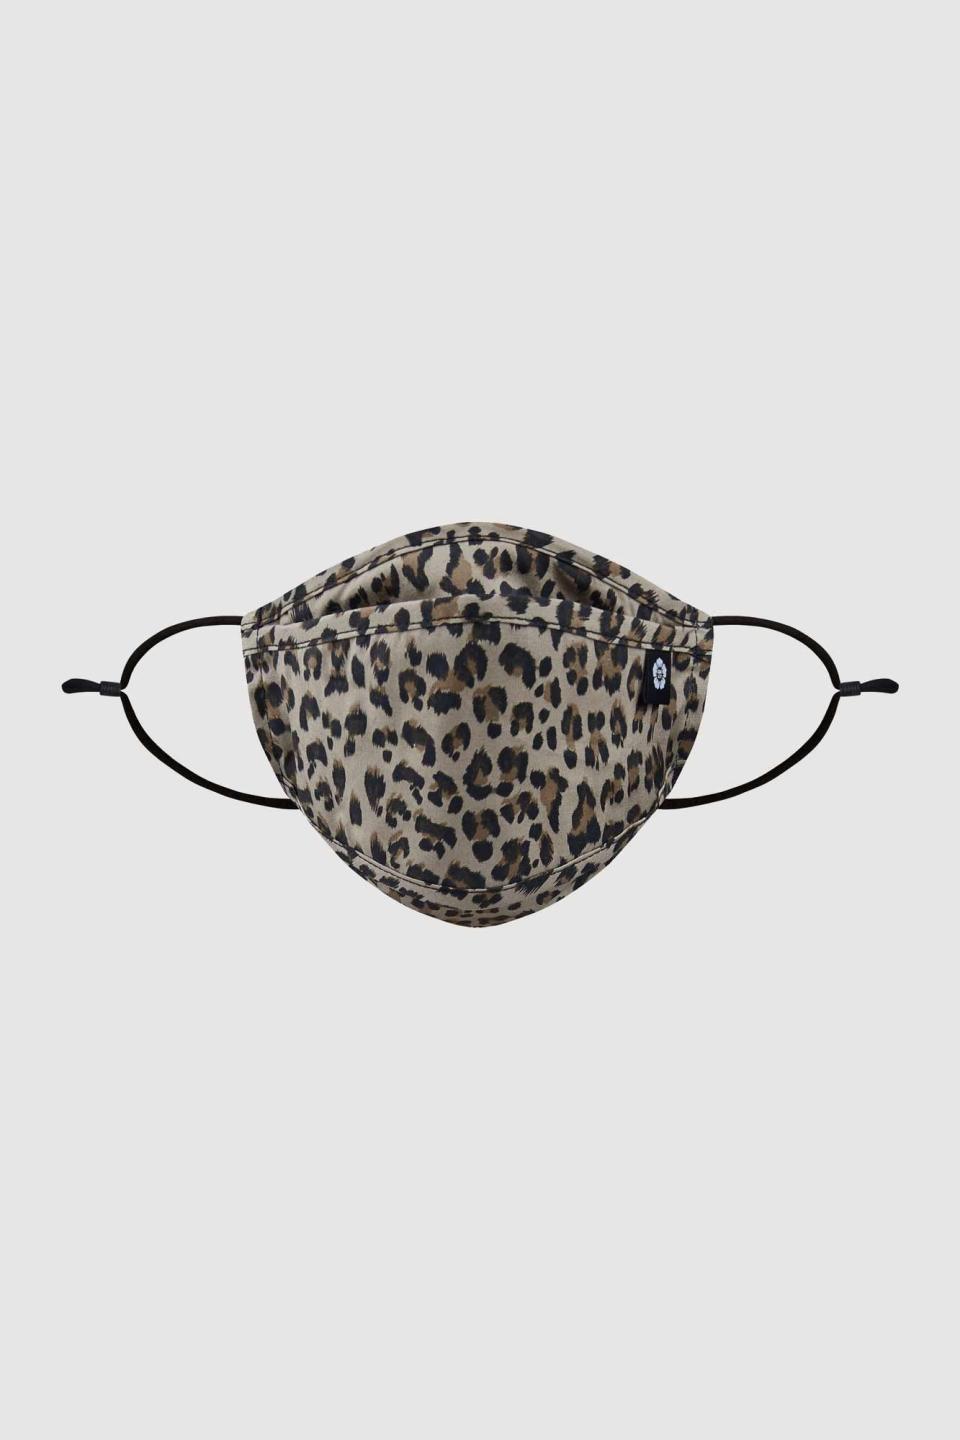 8) Latte Cheetah Mask